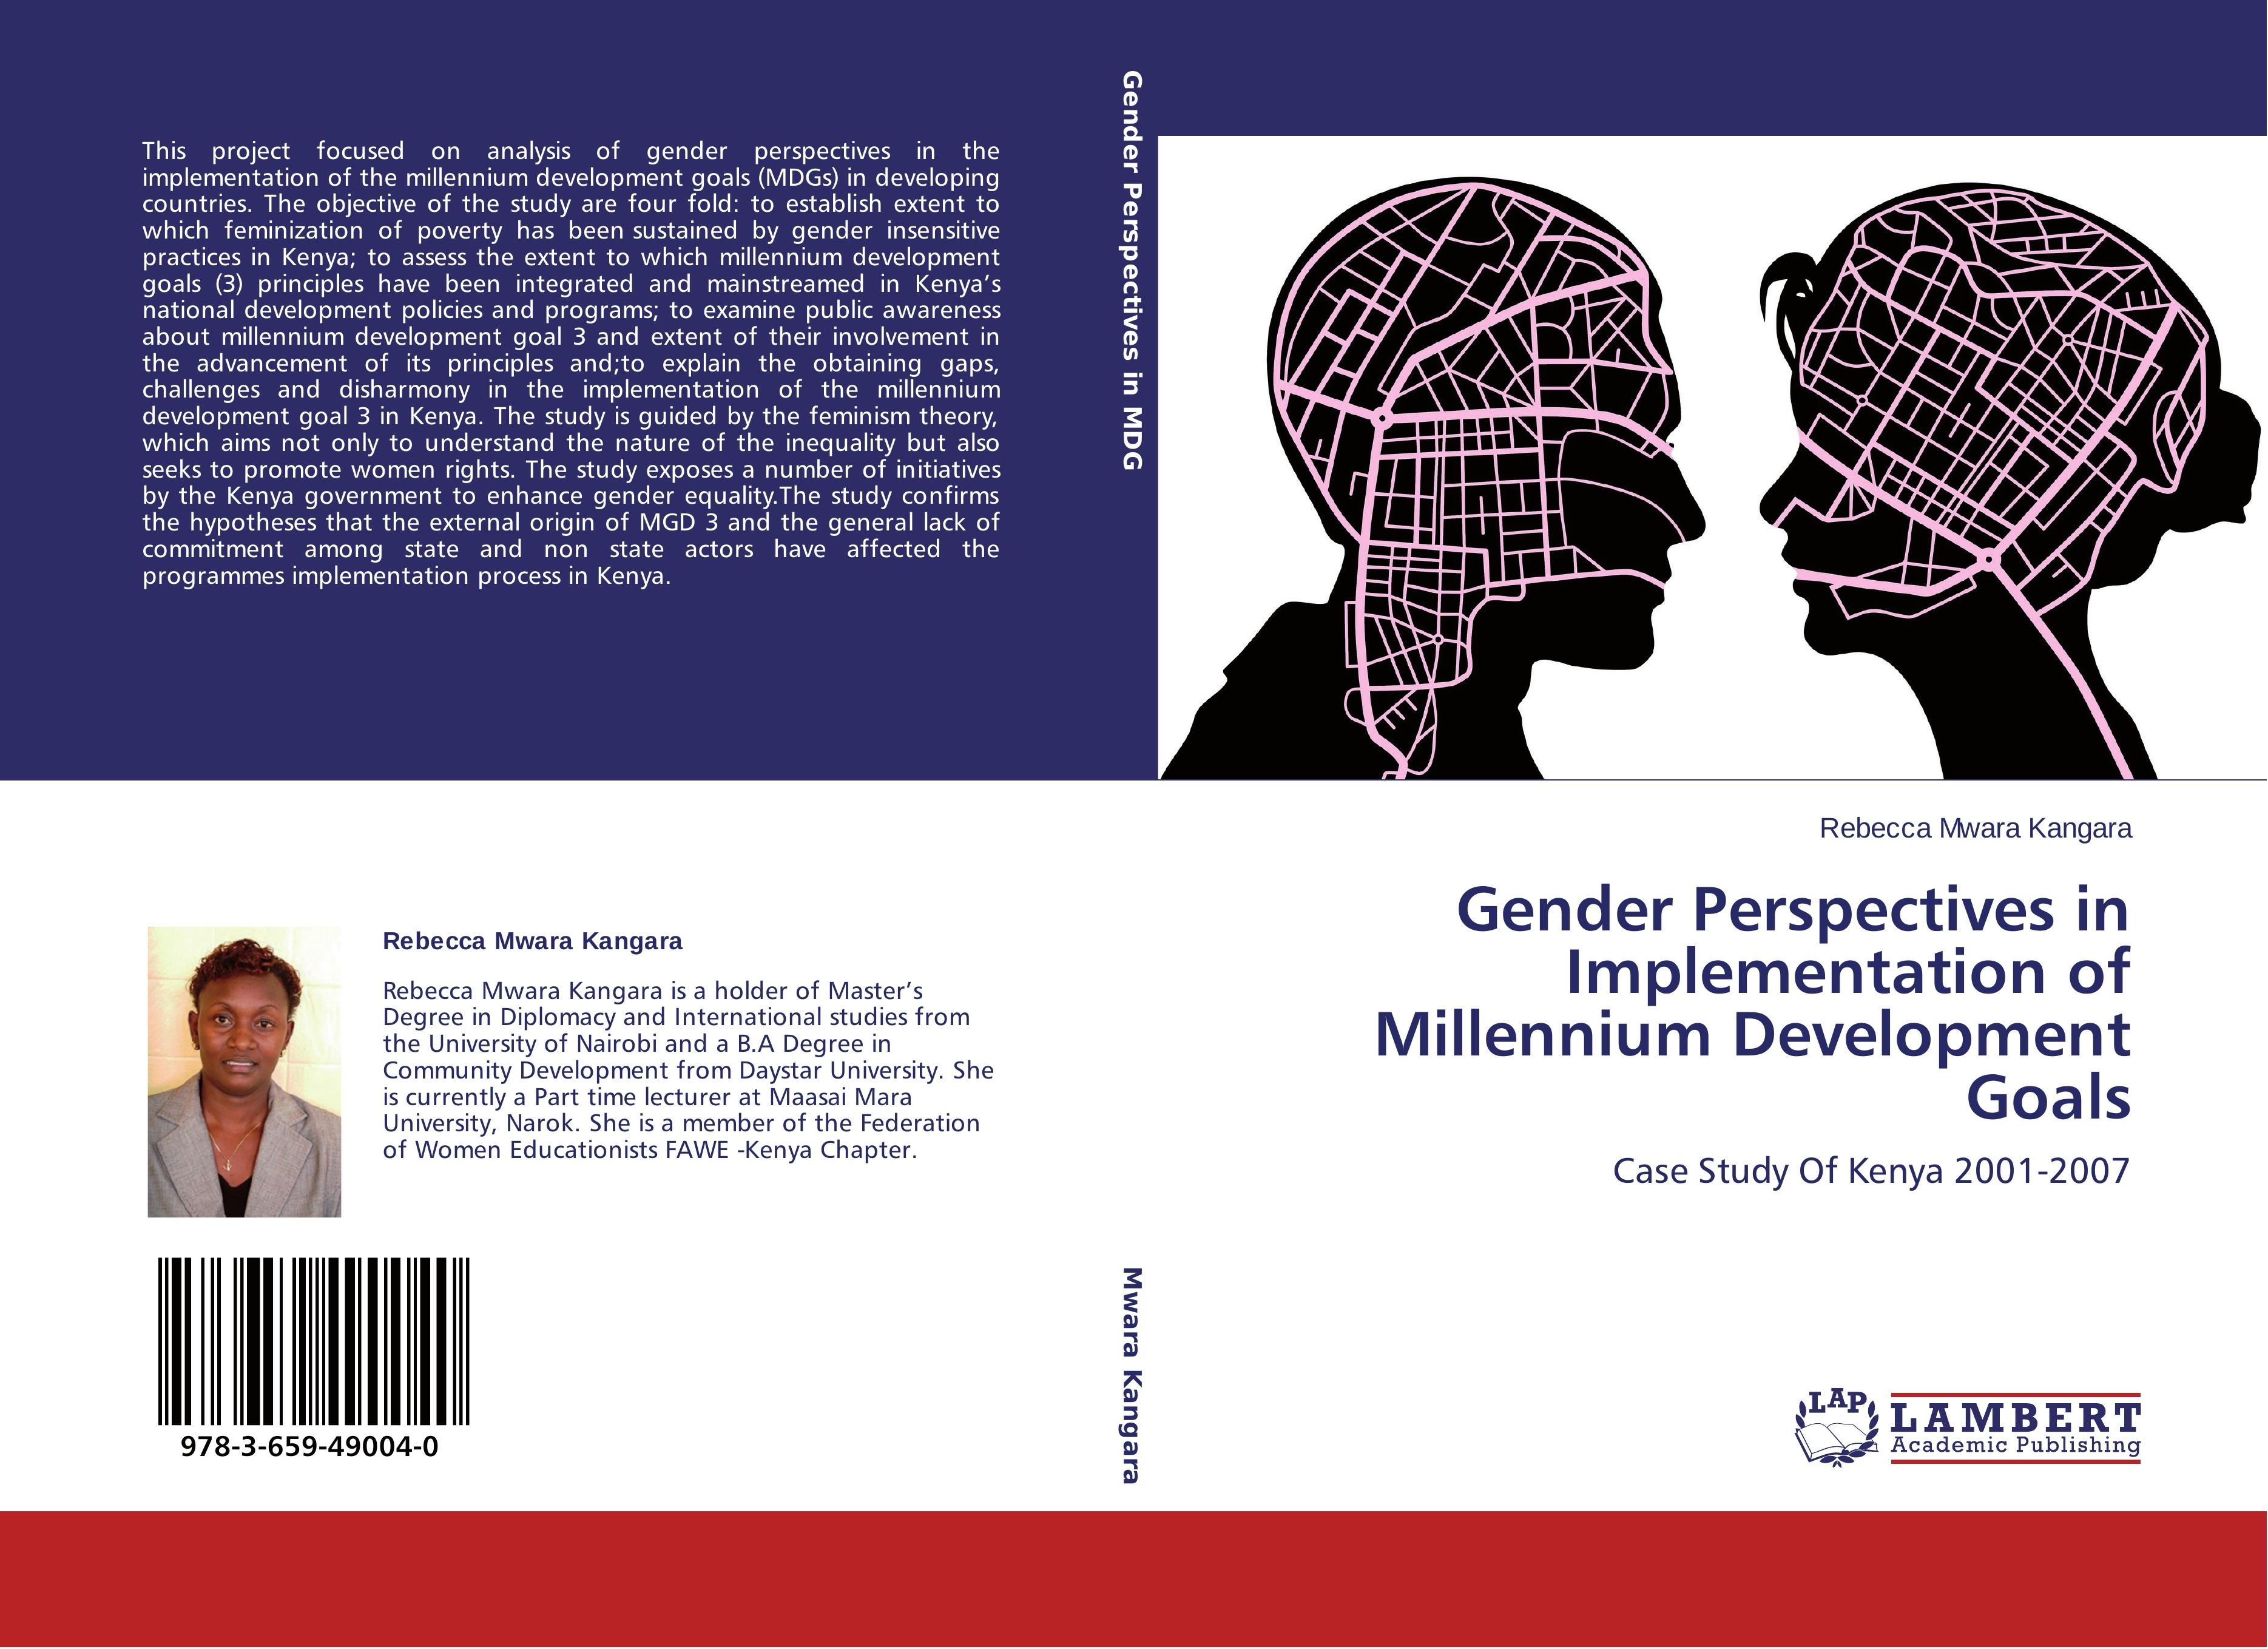 Gender Perspectives in Implementation of Millennium Development Goals - Rebecca Mwara Kangara